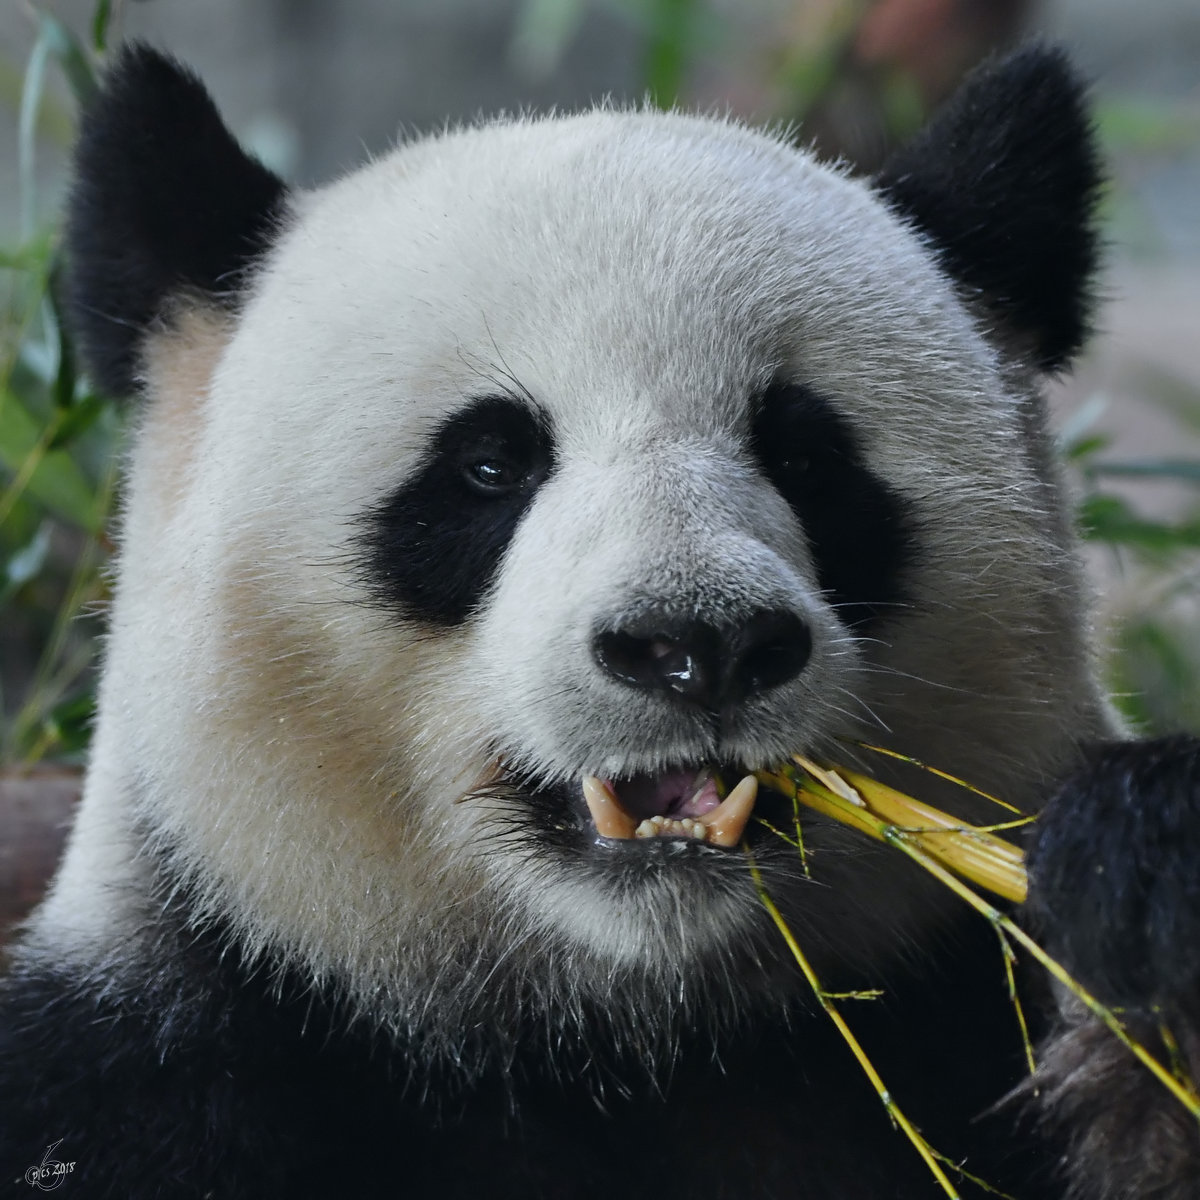 Ein Groer Panda Ende April 2018 beim Fressen im Zoo Berlin.